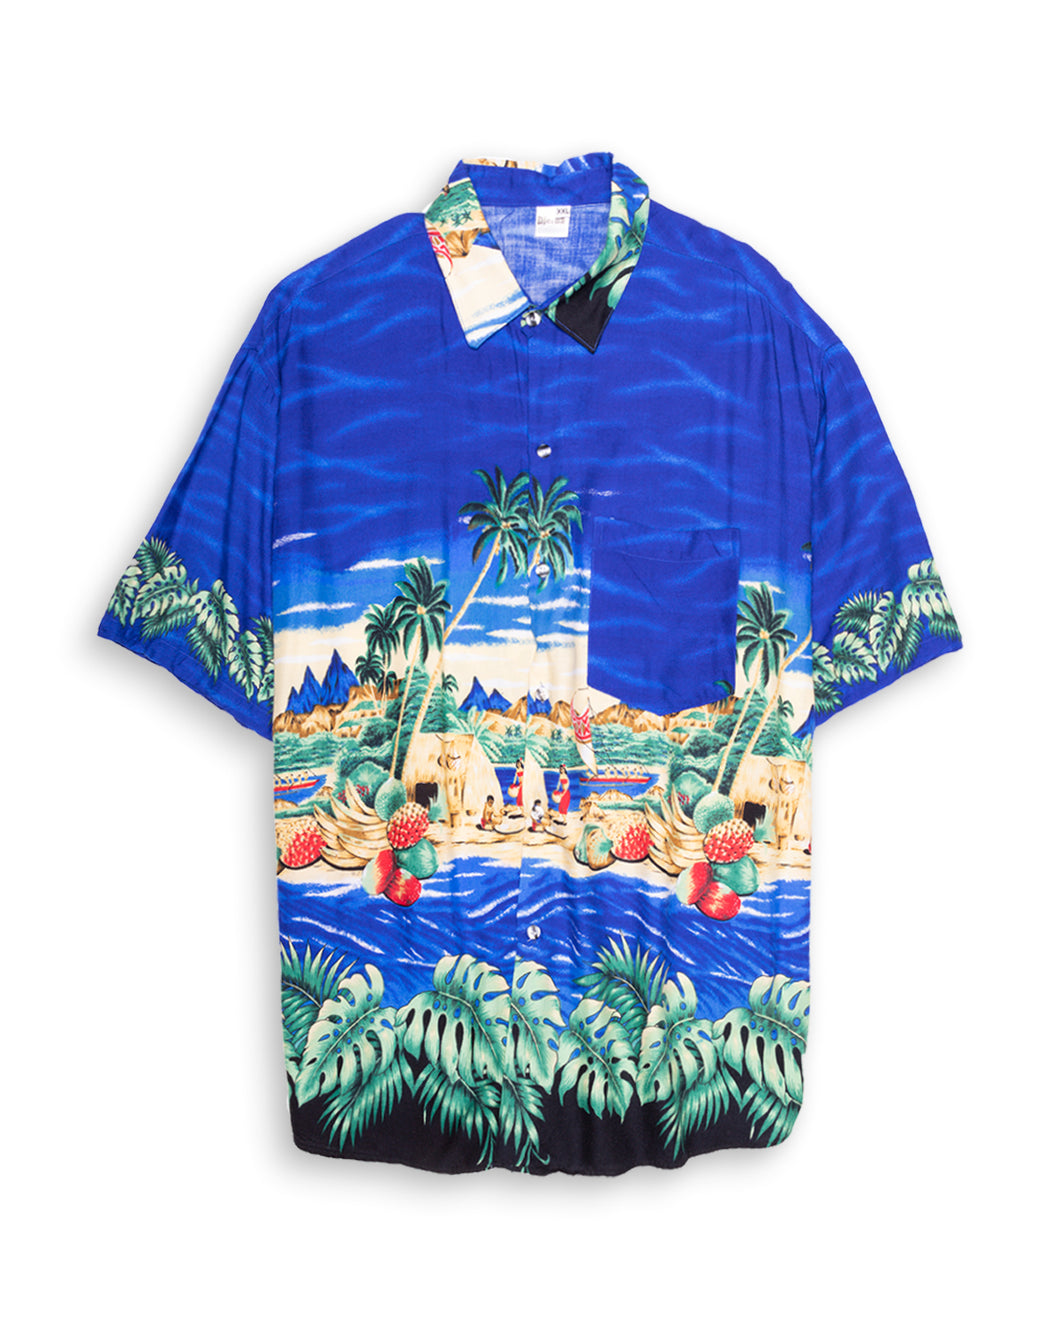 Electric blue Hawaiian shirt